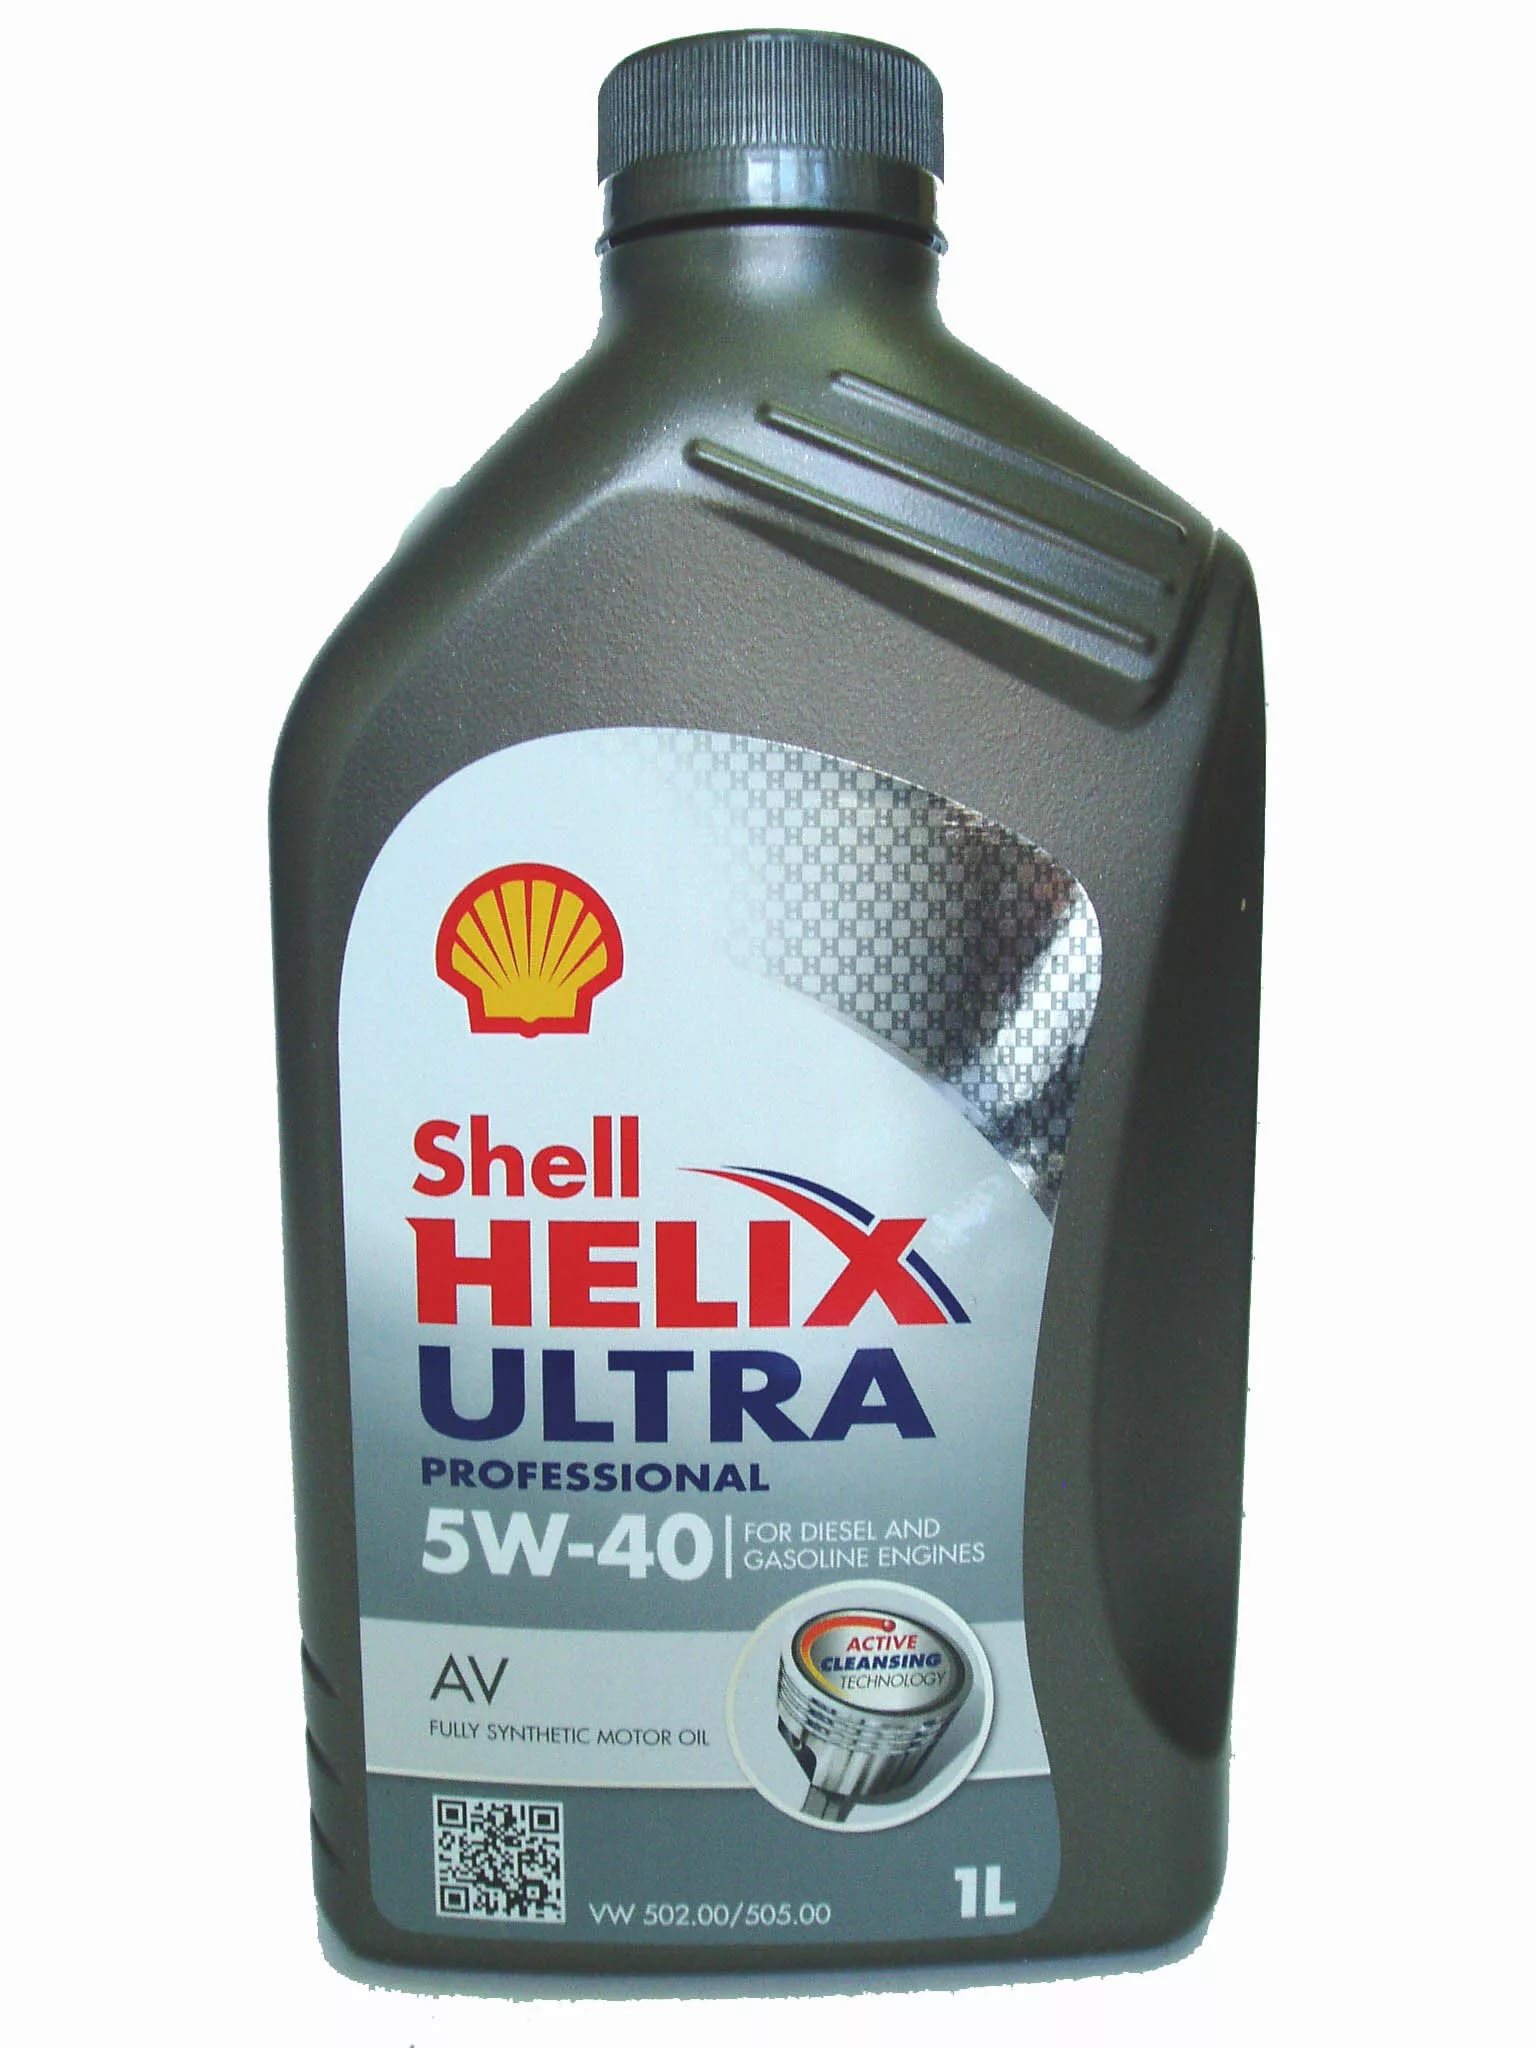 Helix ultra professional av. Shell Helix Ultra professional av 5w-40 4л. Shell Helix Ultra professional av 5w-40. Shell Helix Ultra professional 5w40. Helix Ultra professional av 5w-40.